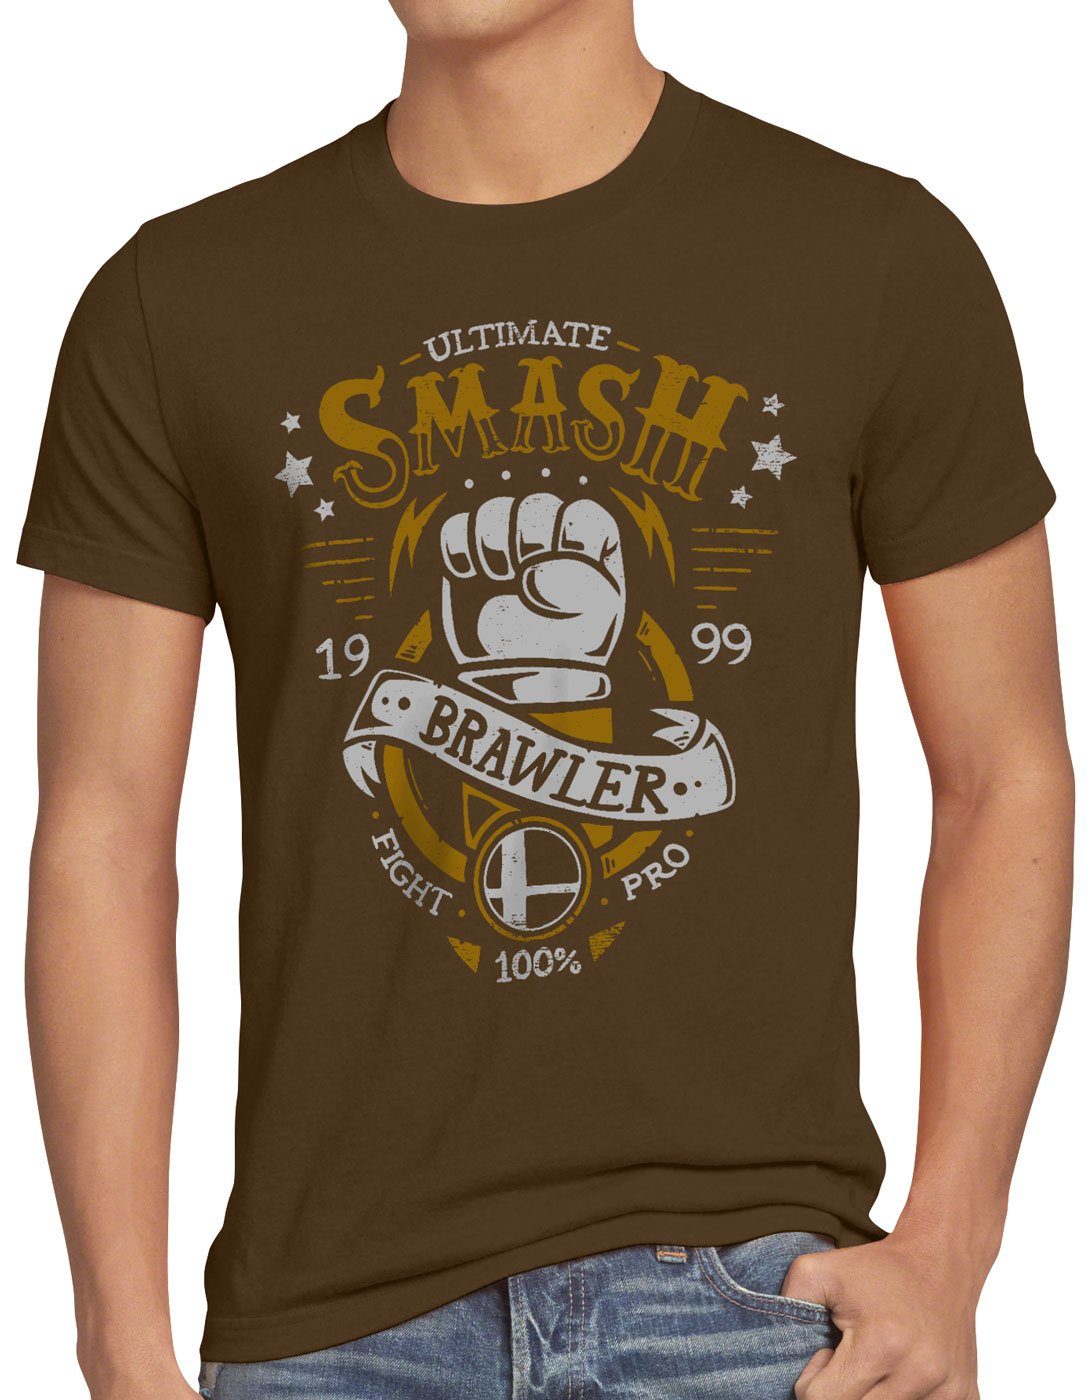 Brawler Print-Shirt braun Switch bros style3 T-Shirt Herren Ultimate Smash